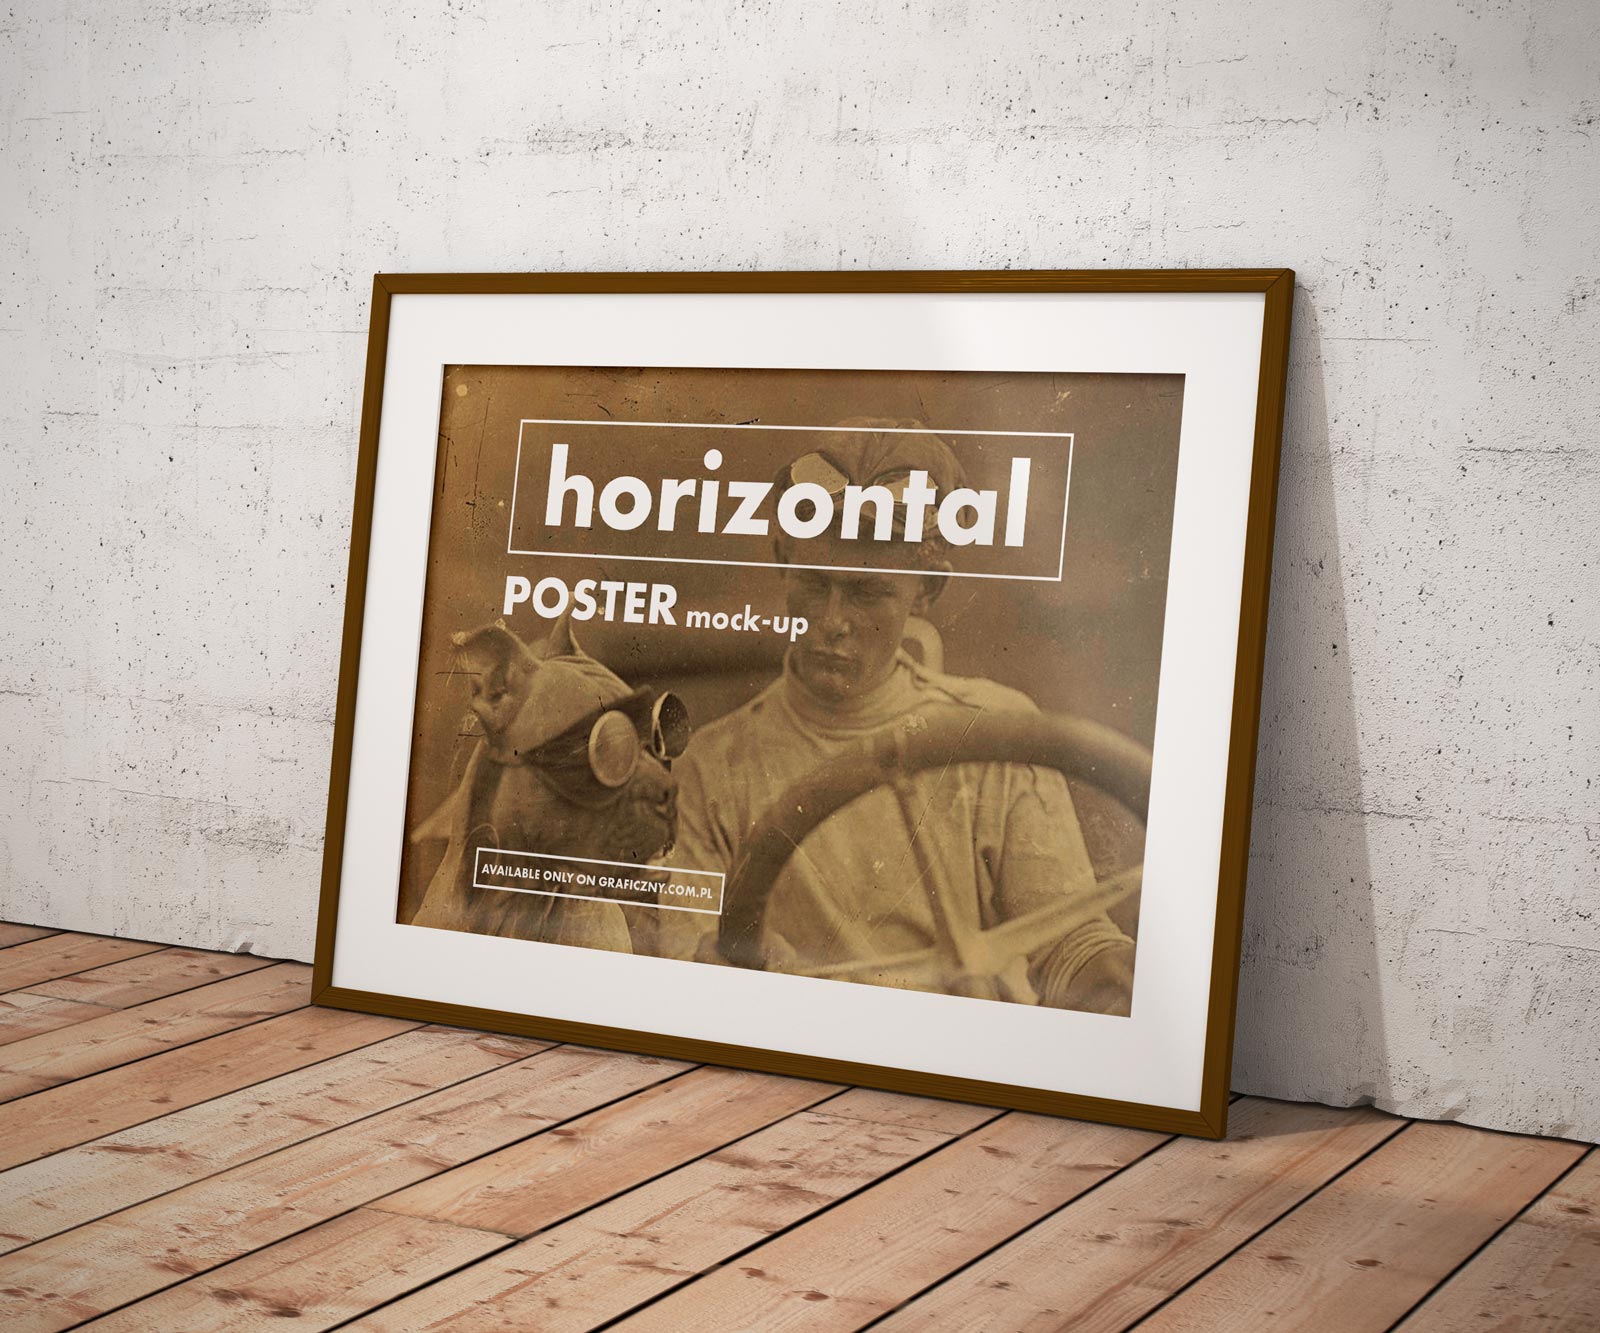 Horizontal & Vertical Photo Frame PSD Files